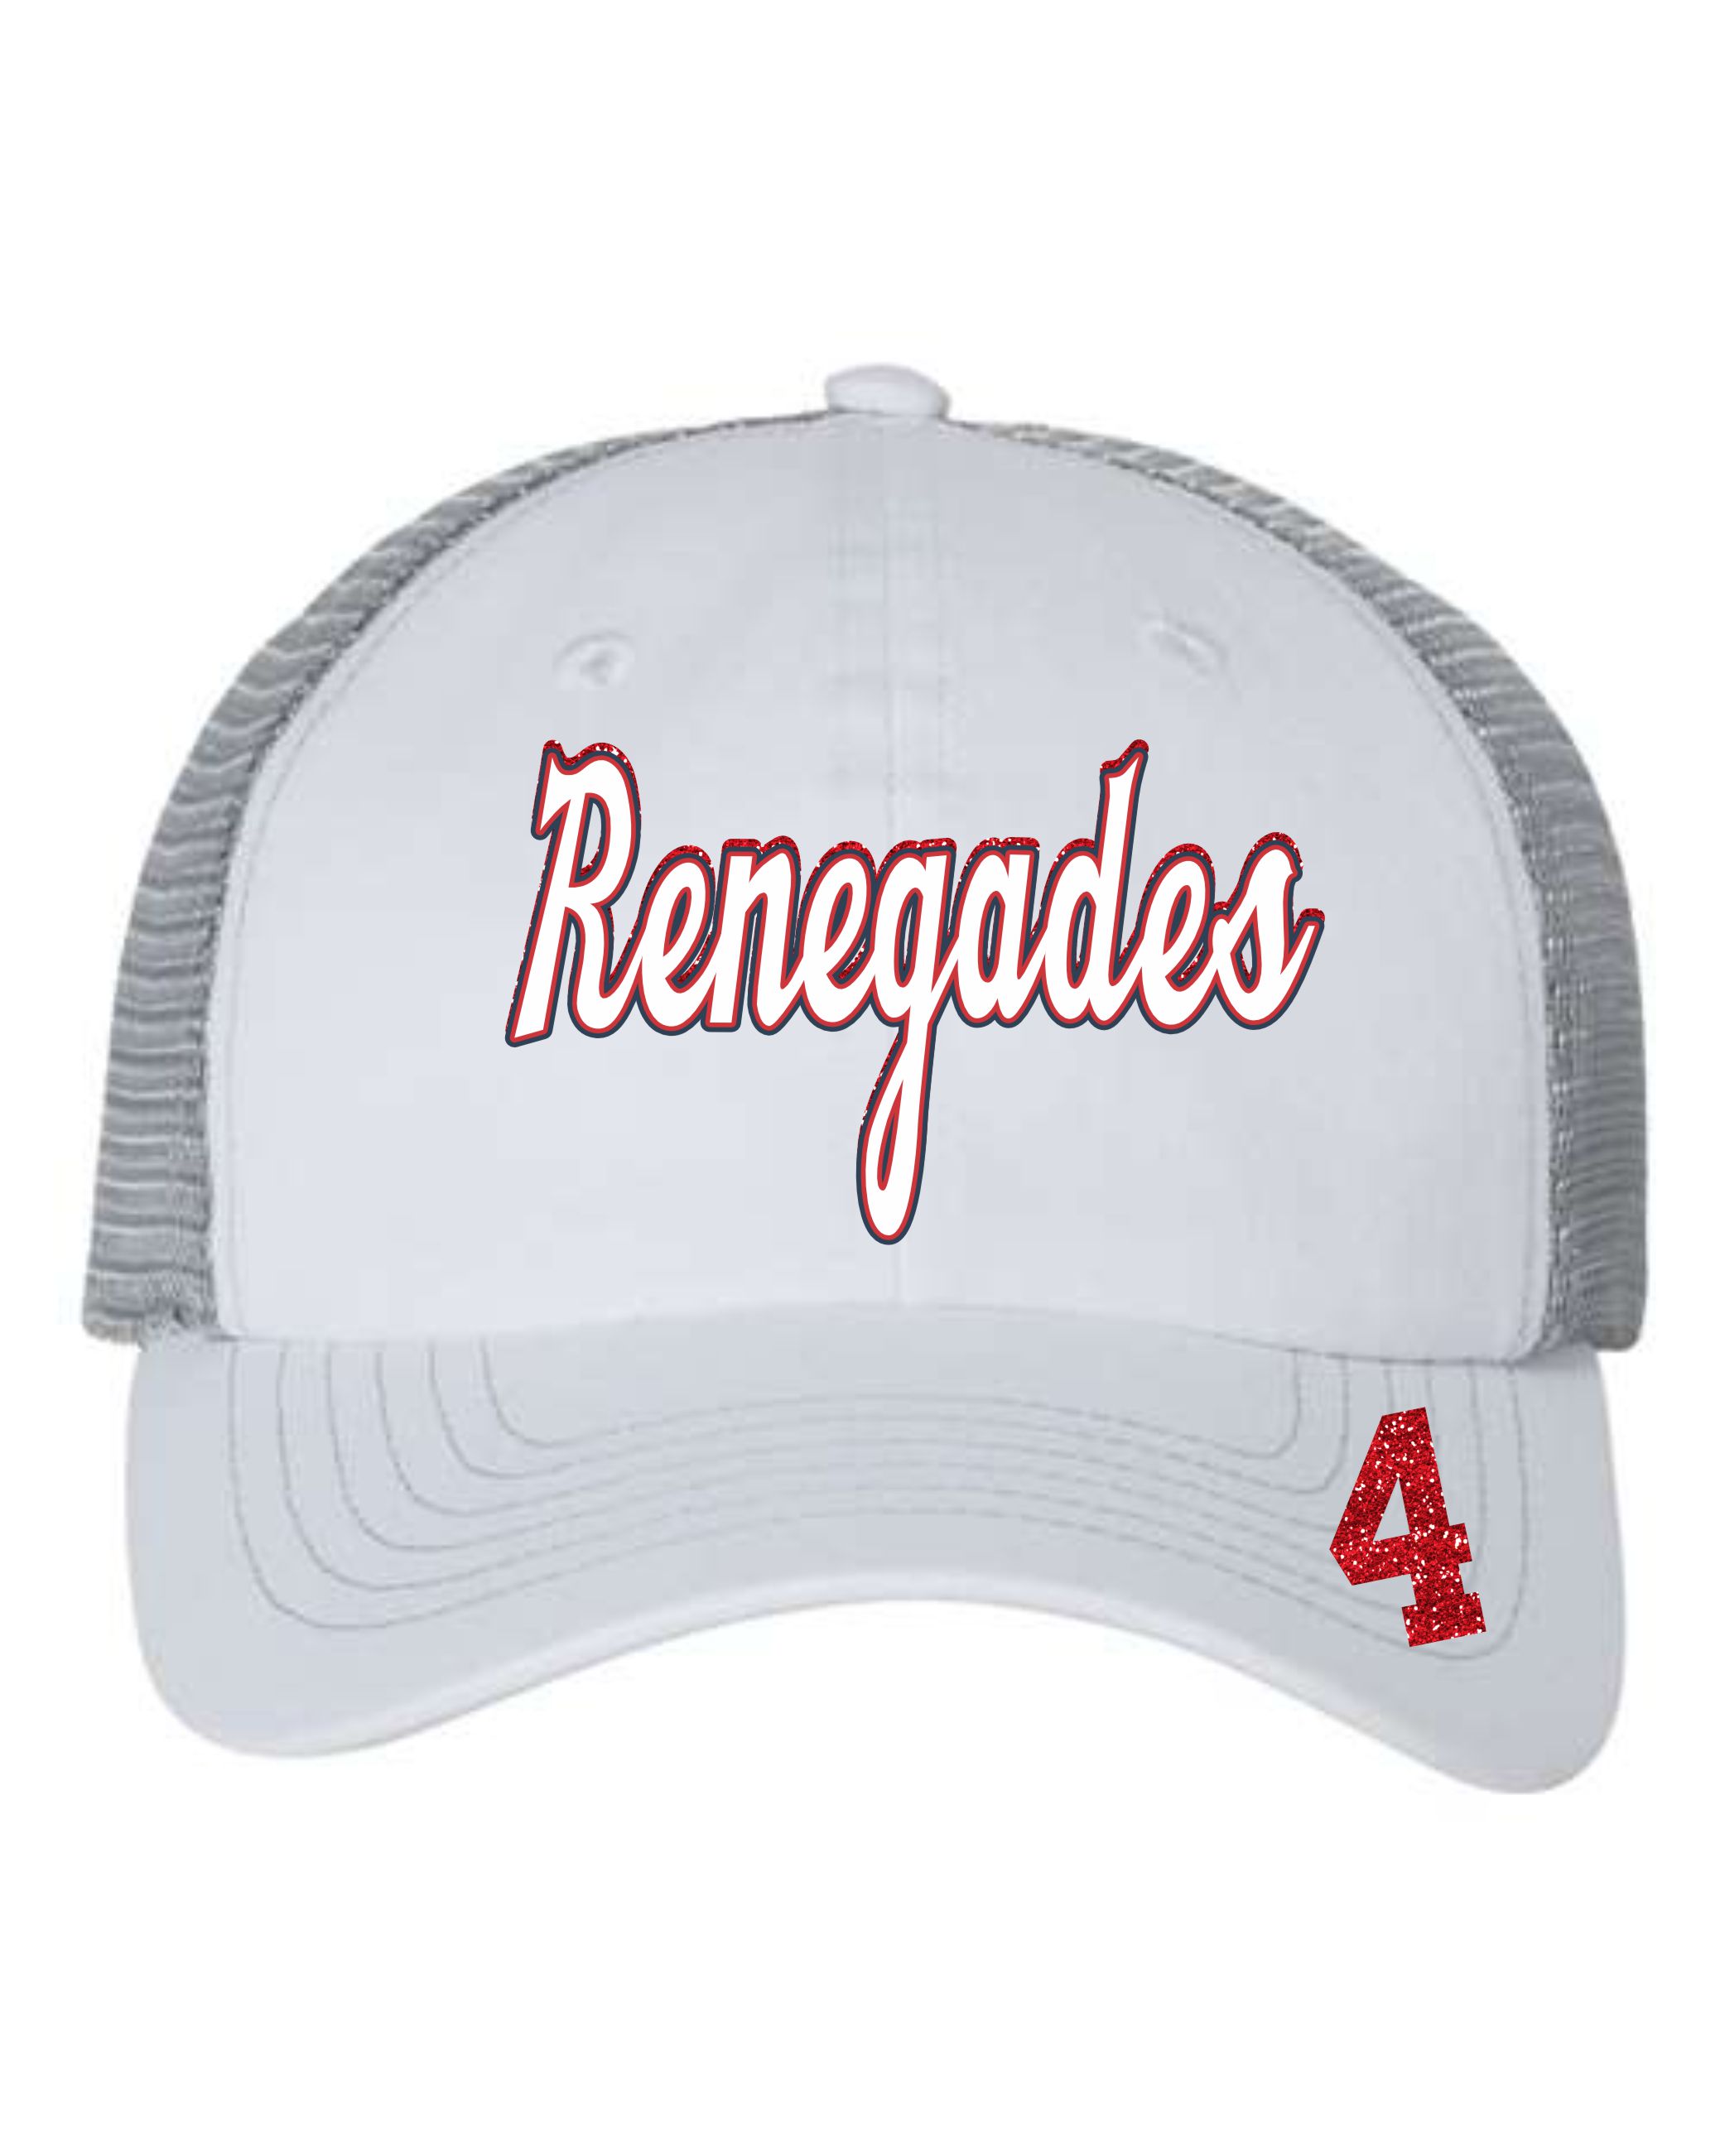 Renegades hat